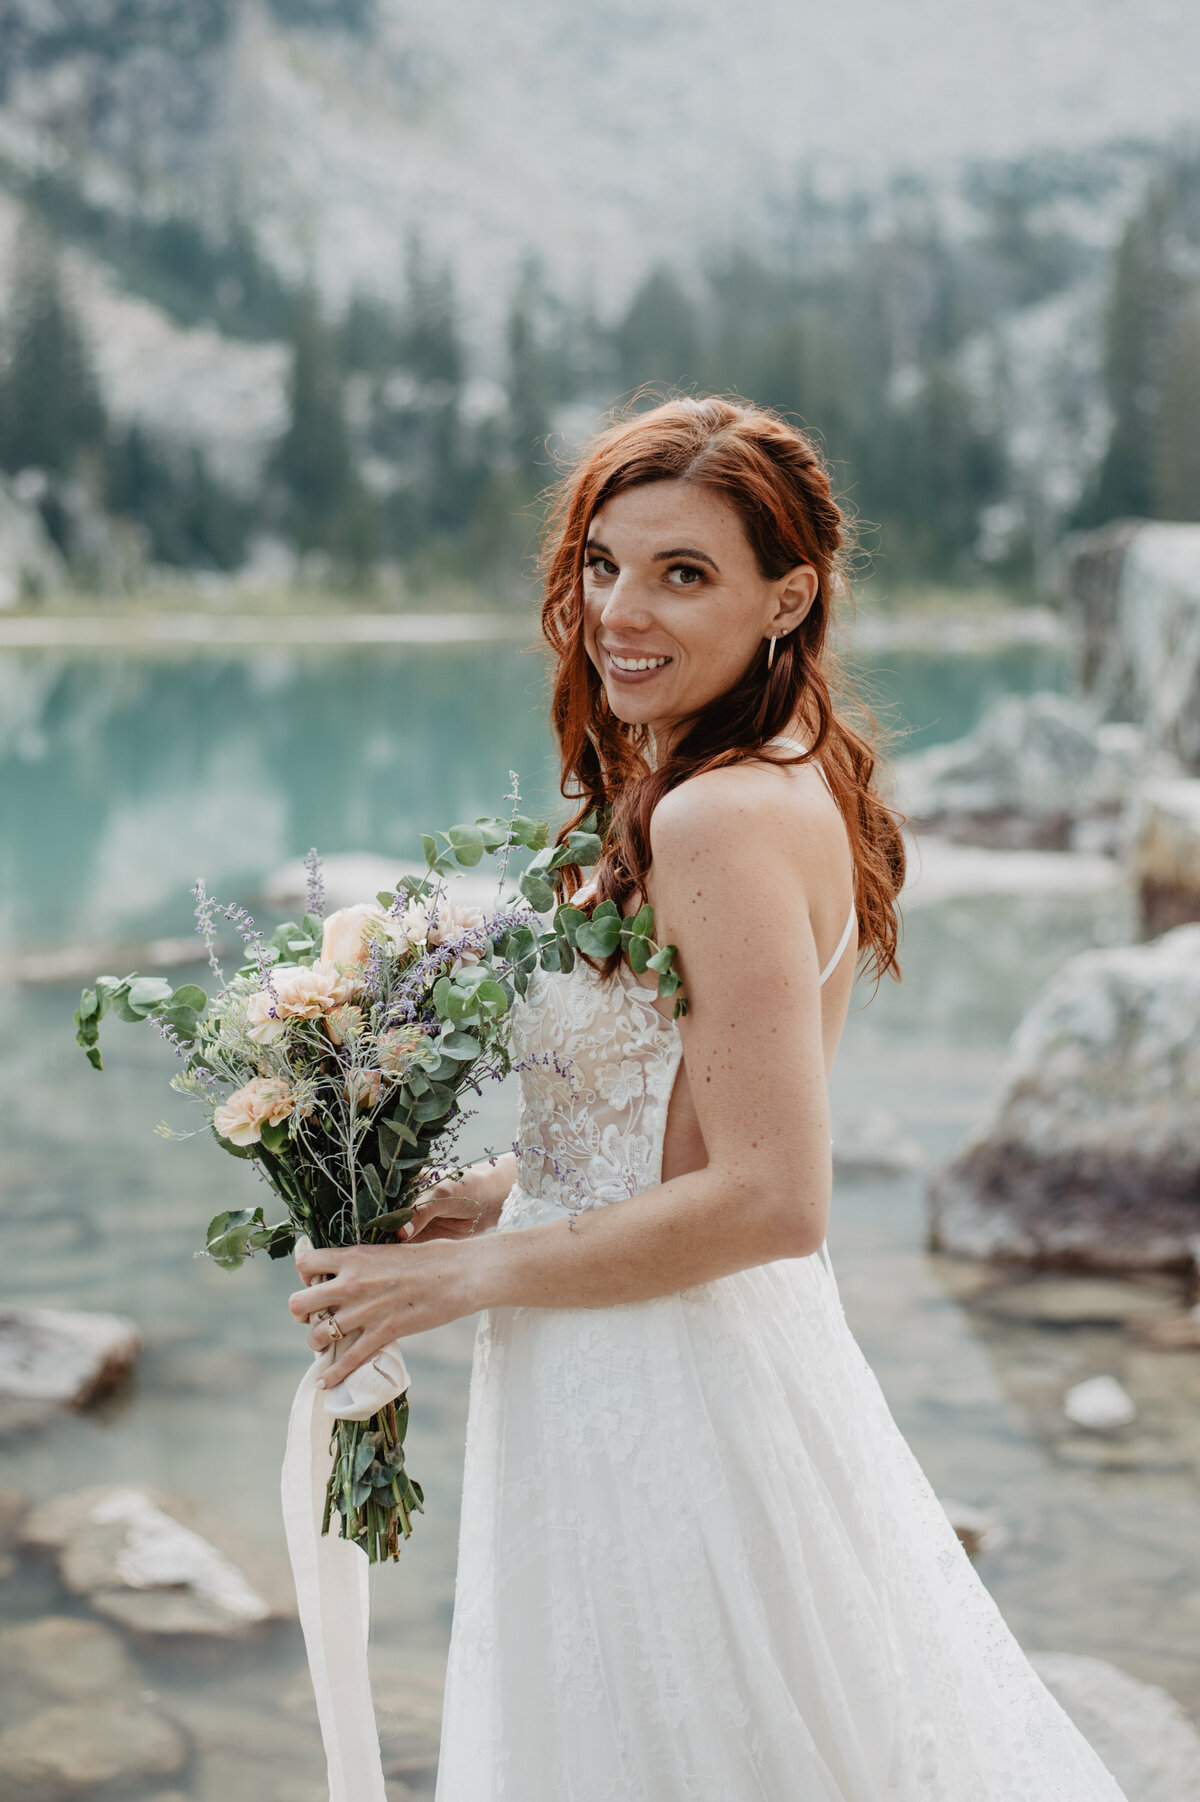 Jackson Hole Photographers capture bride holding bouquet and smiling